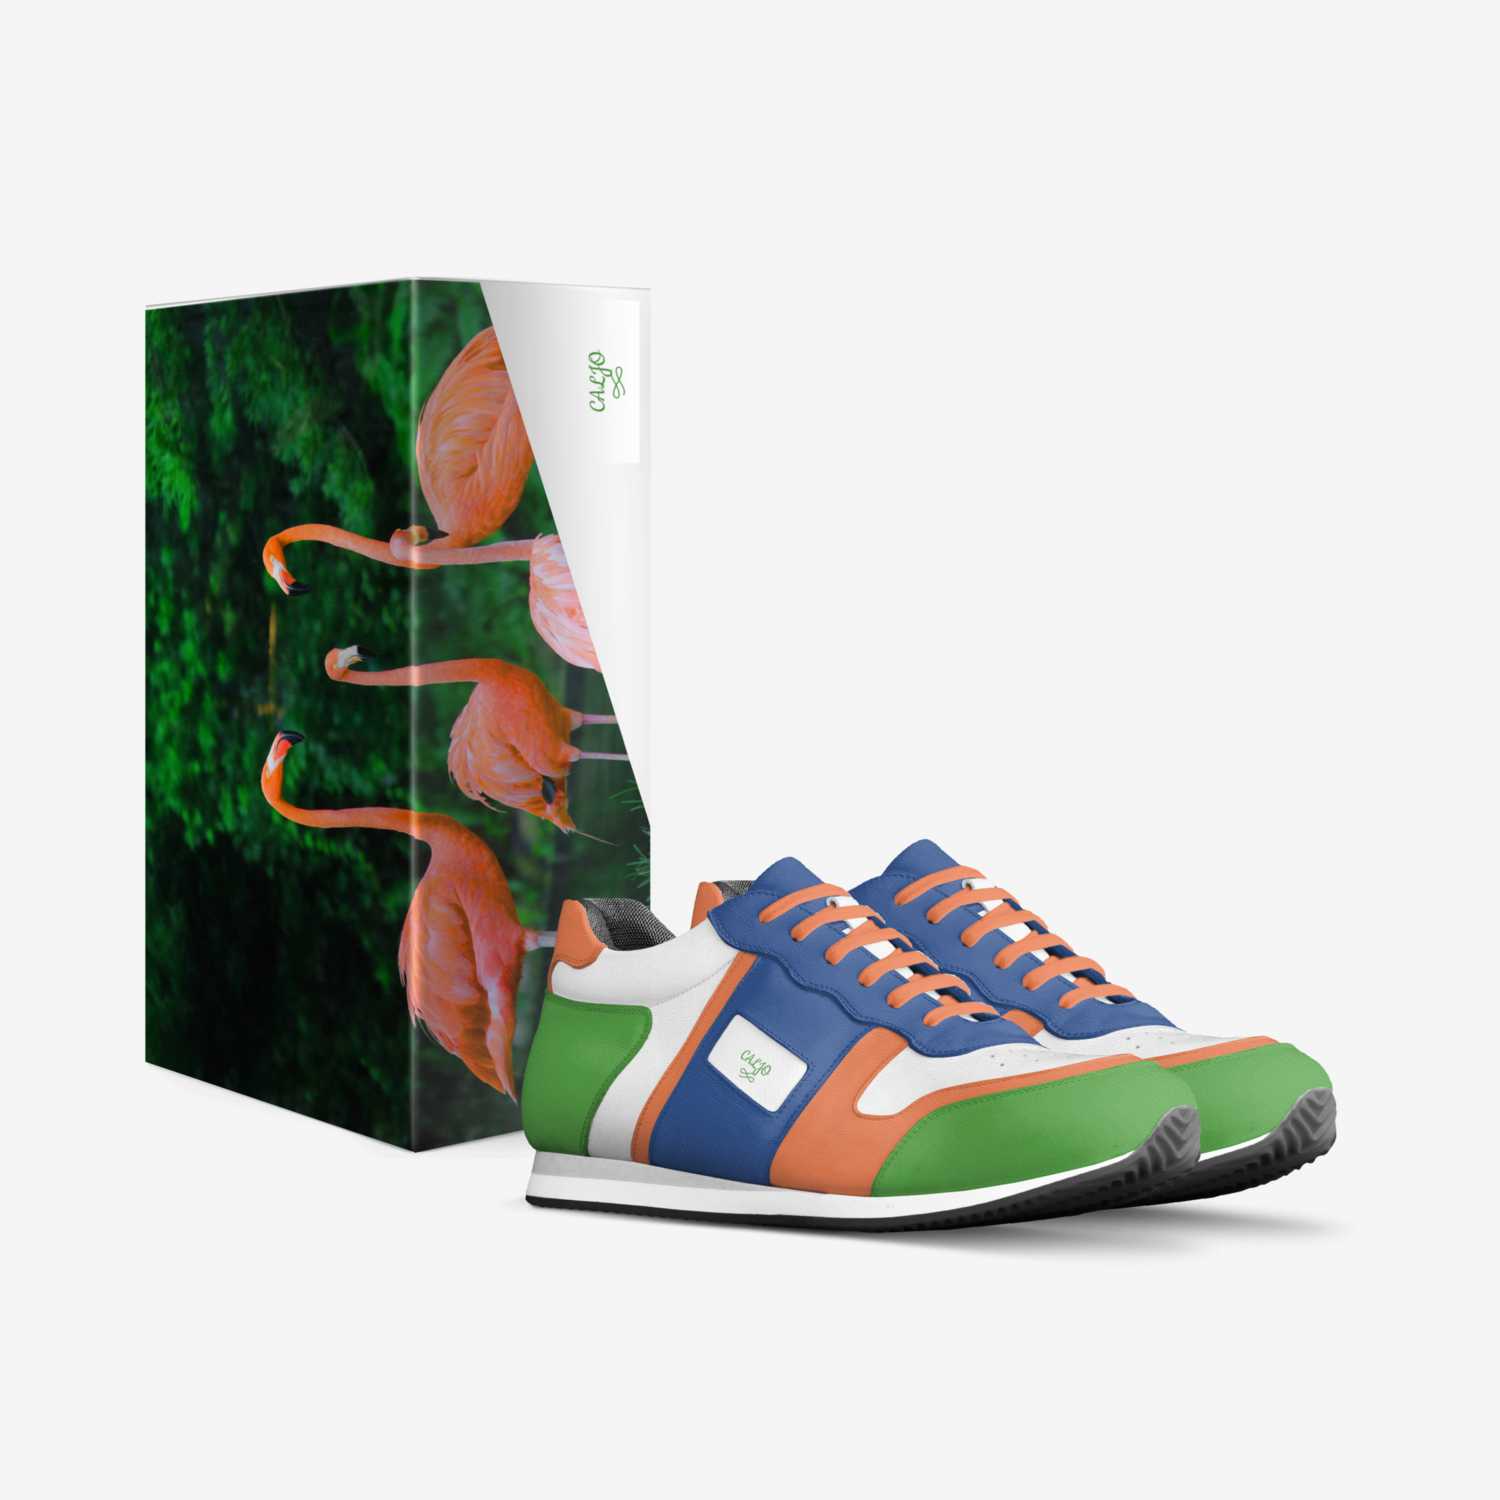 CALJO custom made in Italy shoes by Calvin Johnson | Box view